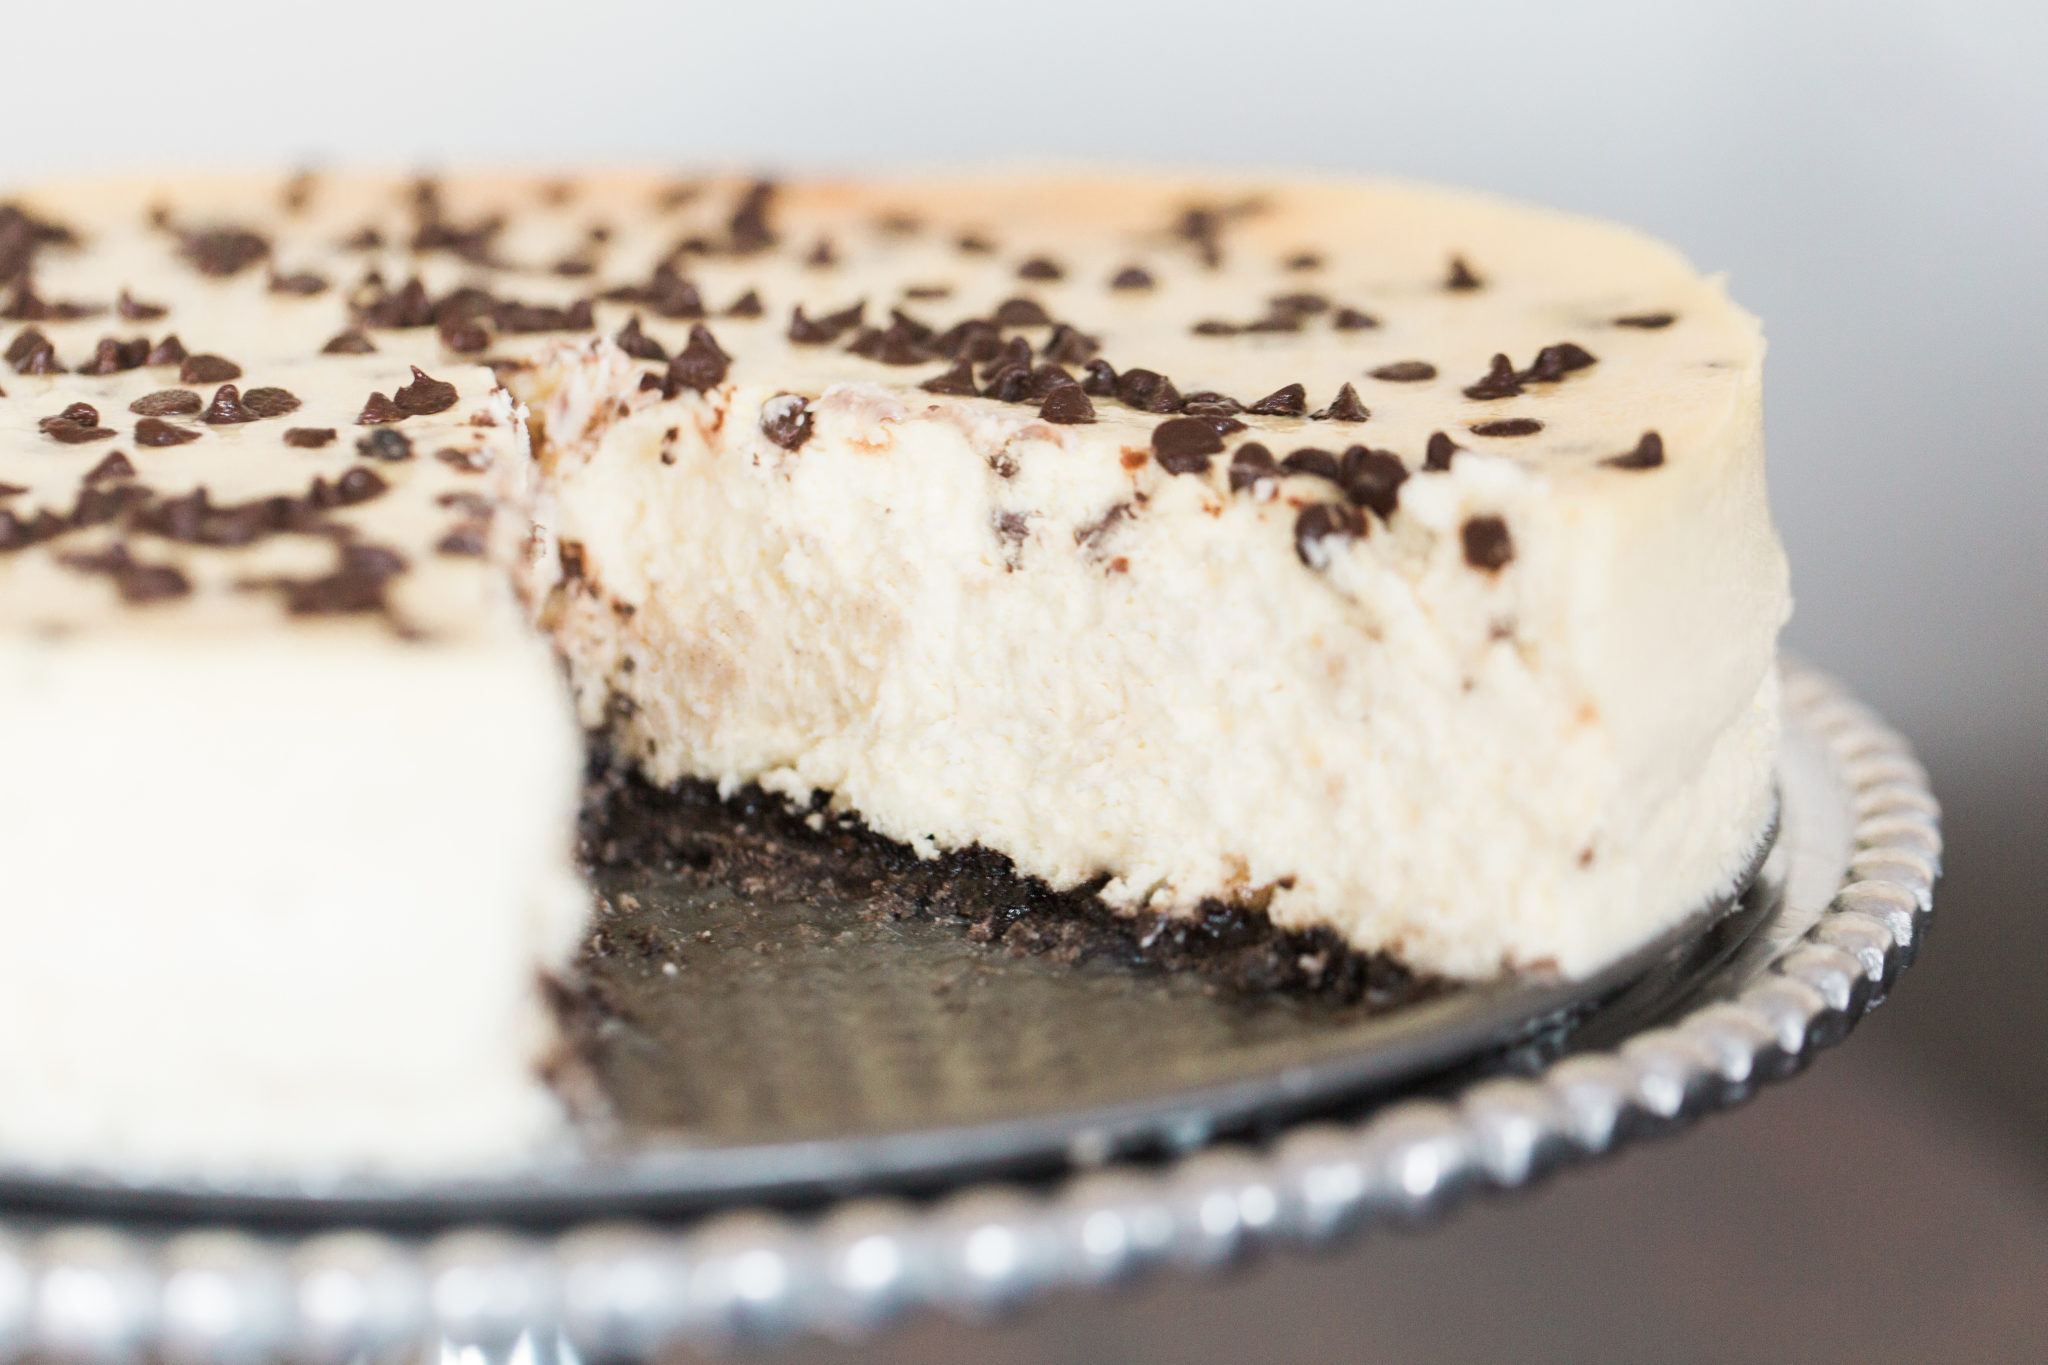 Washington, DC wedding photographer shares her favorite chocolate chip cheesecake recipe.